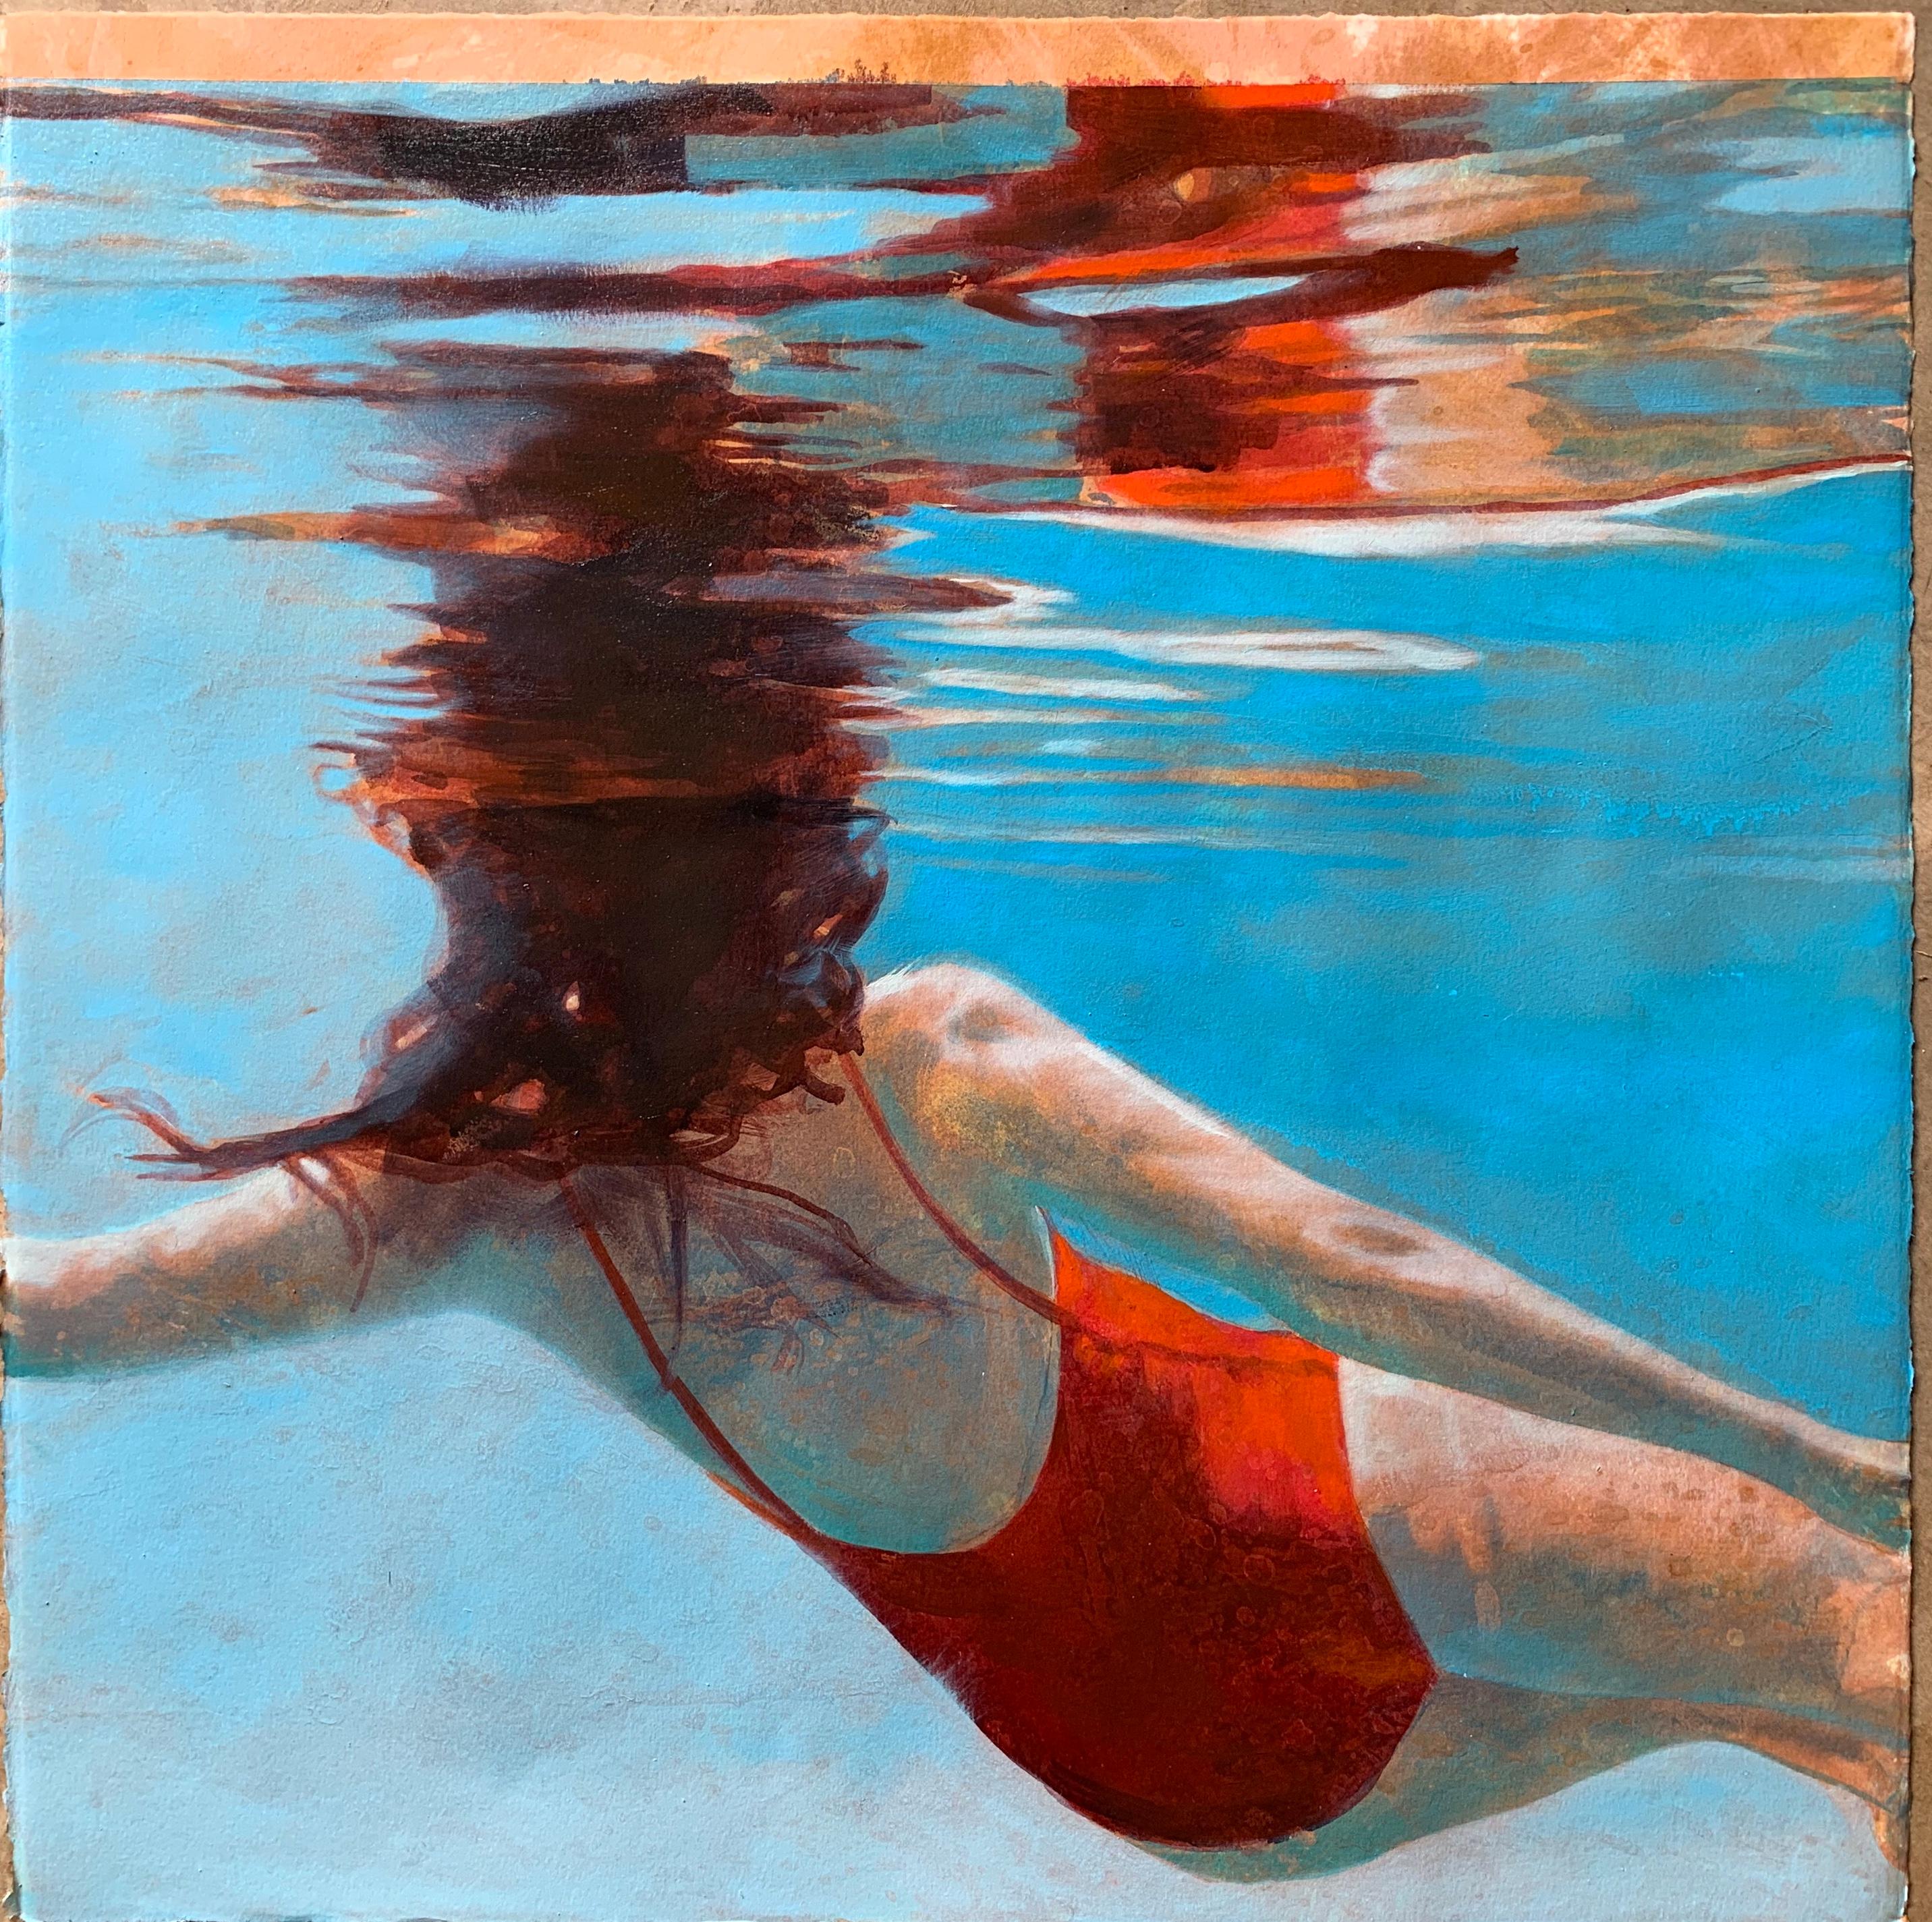 Carol Bennett Figurative Painting - Portal, Swimmer, Water, Work on Paper, Blue, Red Swimsuit, Female Figure